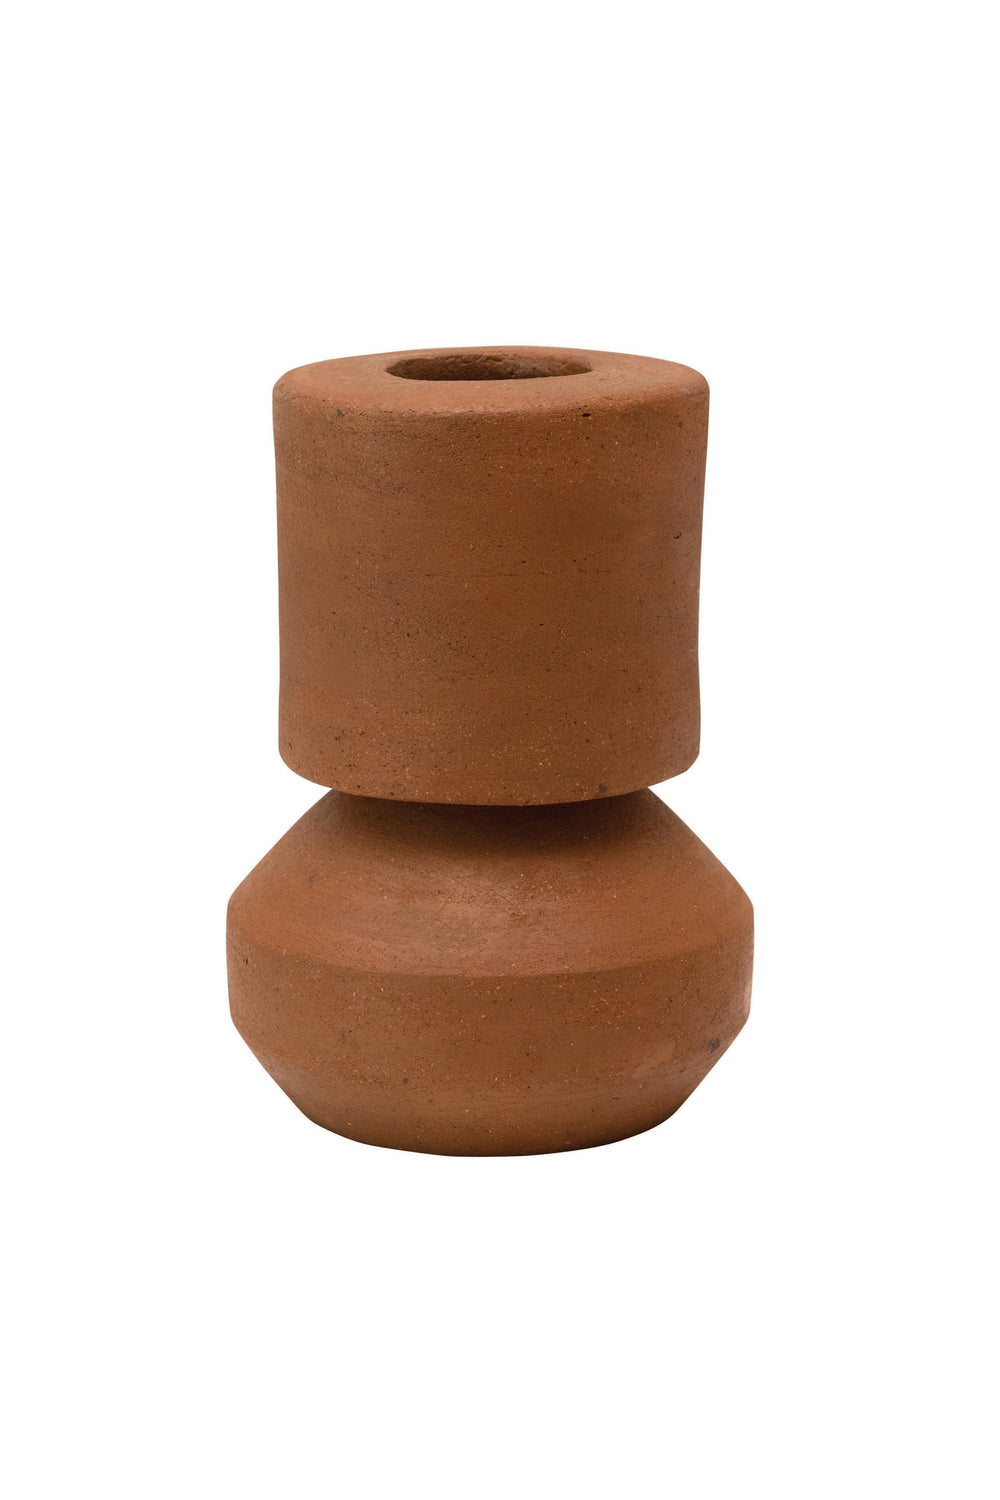 Coba Terracotta Vase